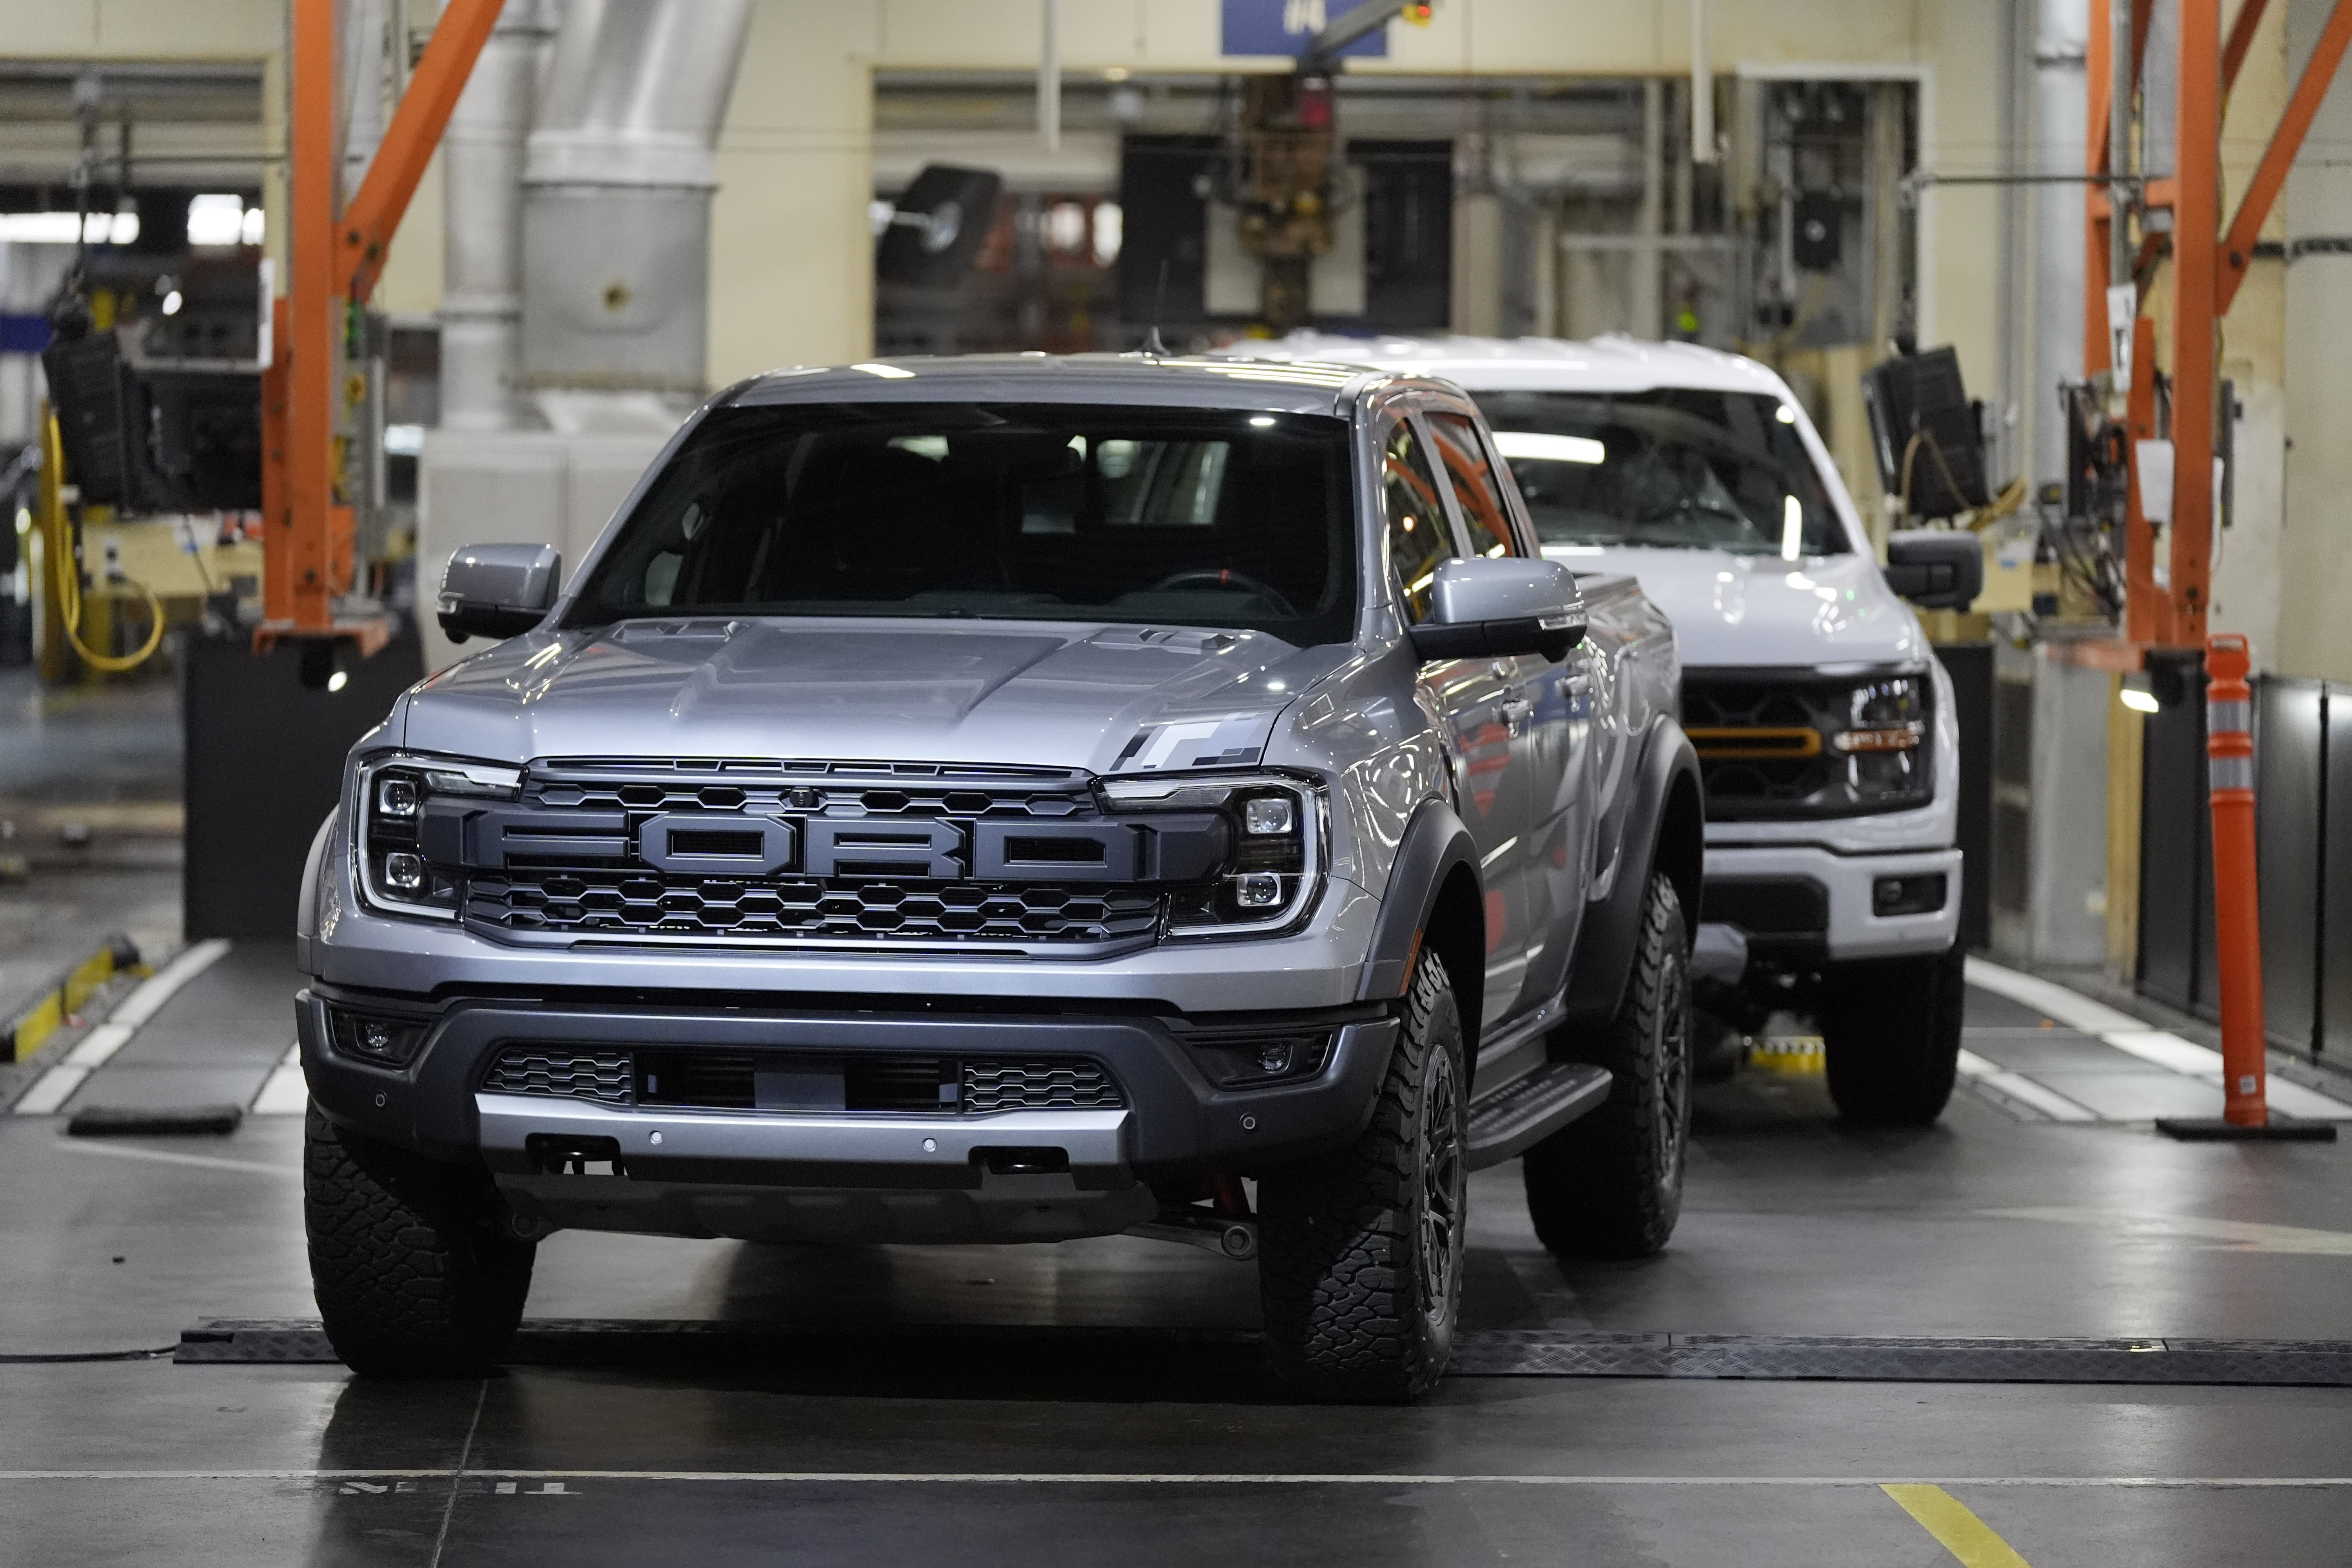 Ford's April sales dip, but hybrid shipments surge